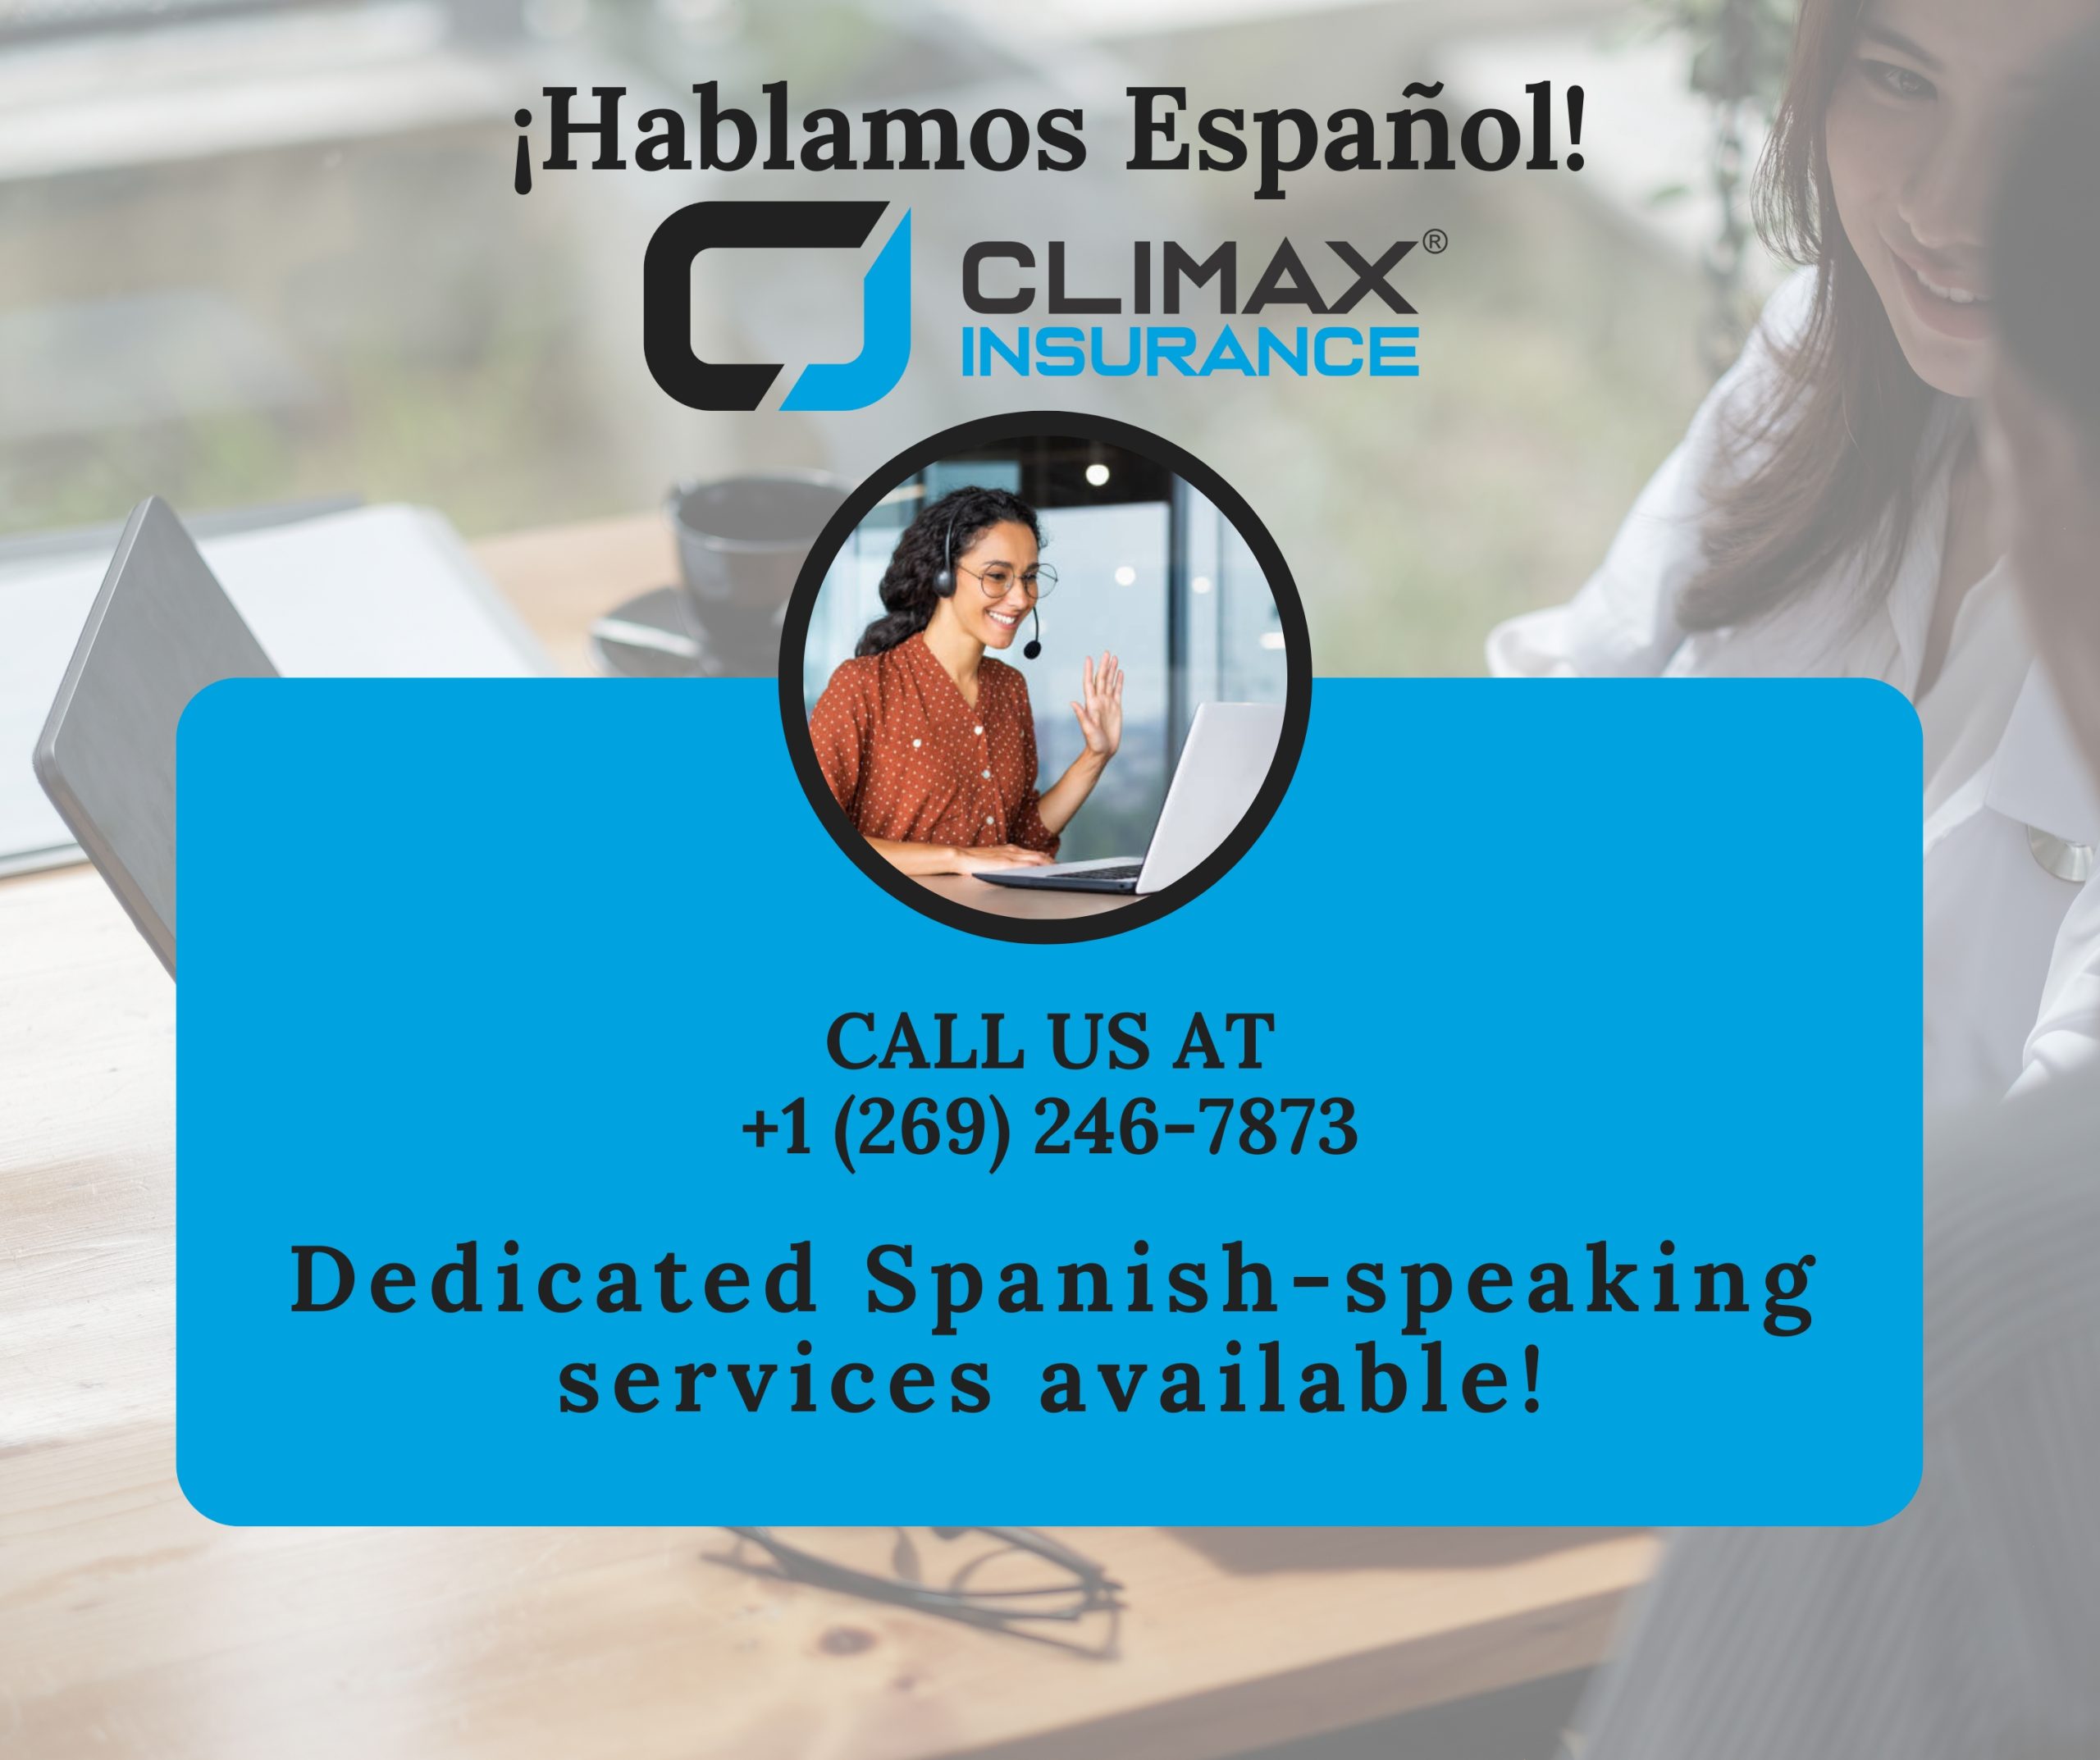 ¡Hablamos Español! Climax Insurance Offers Spanish-Speaking Services